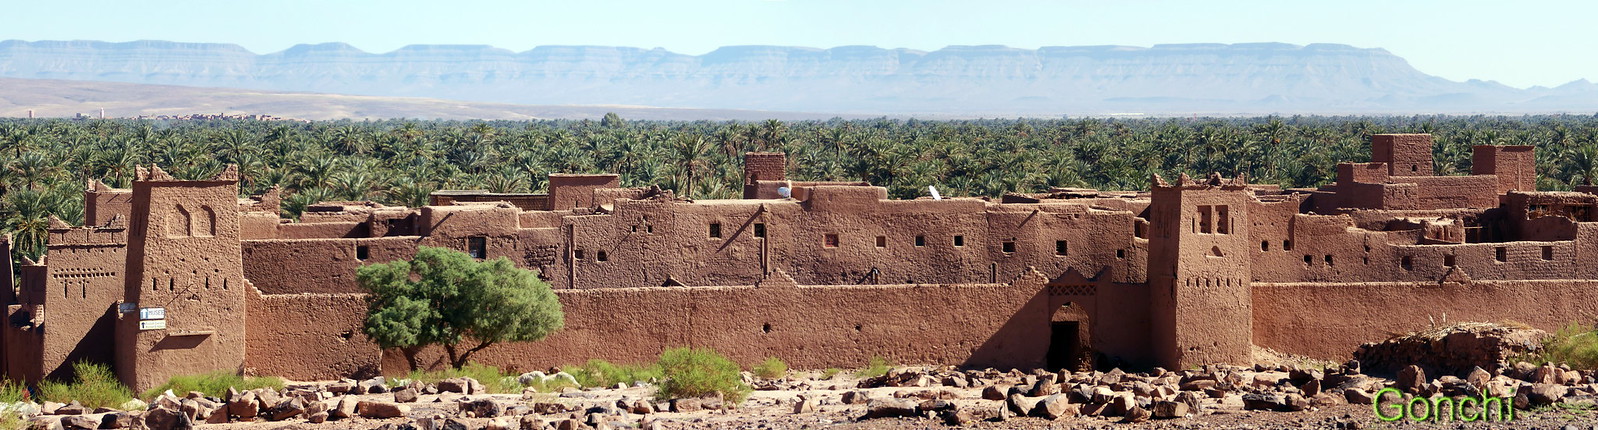 Ouarzazate - Agdz - Valle del Drâa - Zagora - Temegoute - Tagounite. - MARRUECOS SORPRENDE (2)